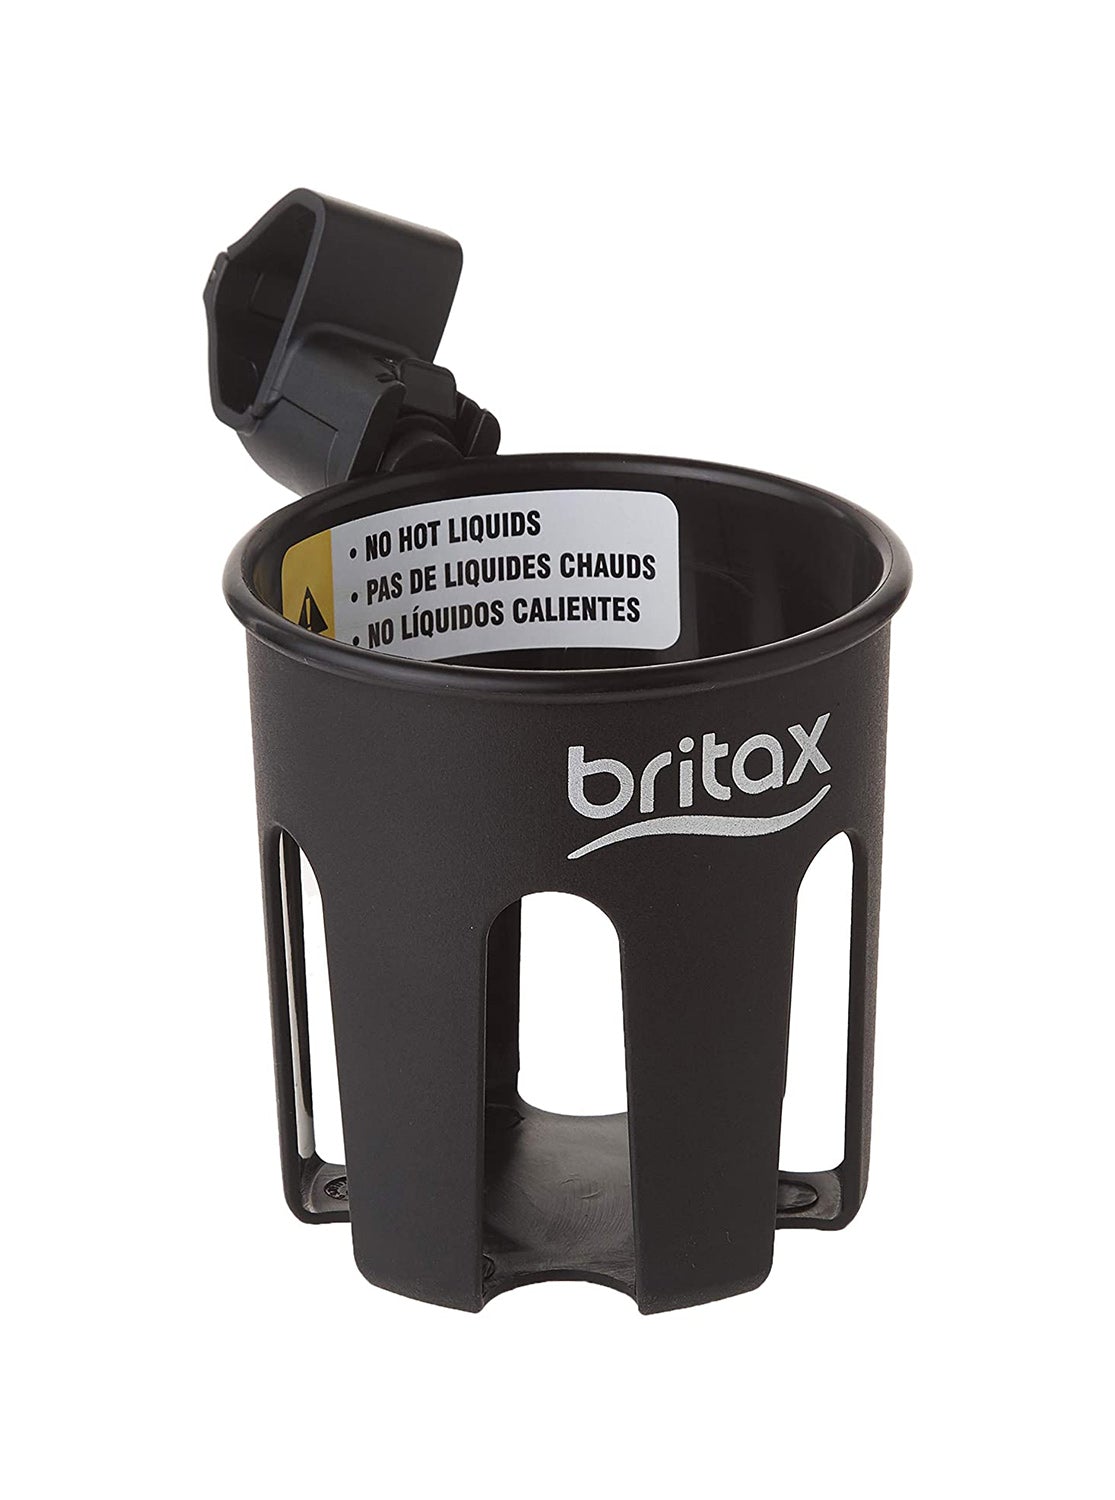 Britax Stroller Cup Holder, Black - ANB Baby -$20 - $50